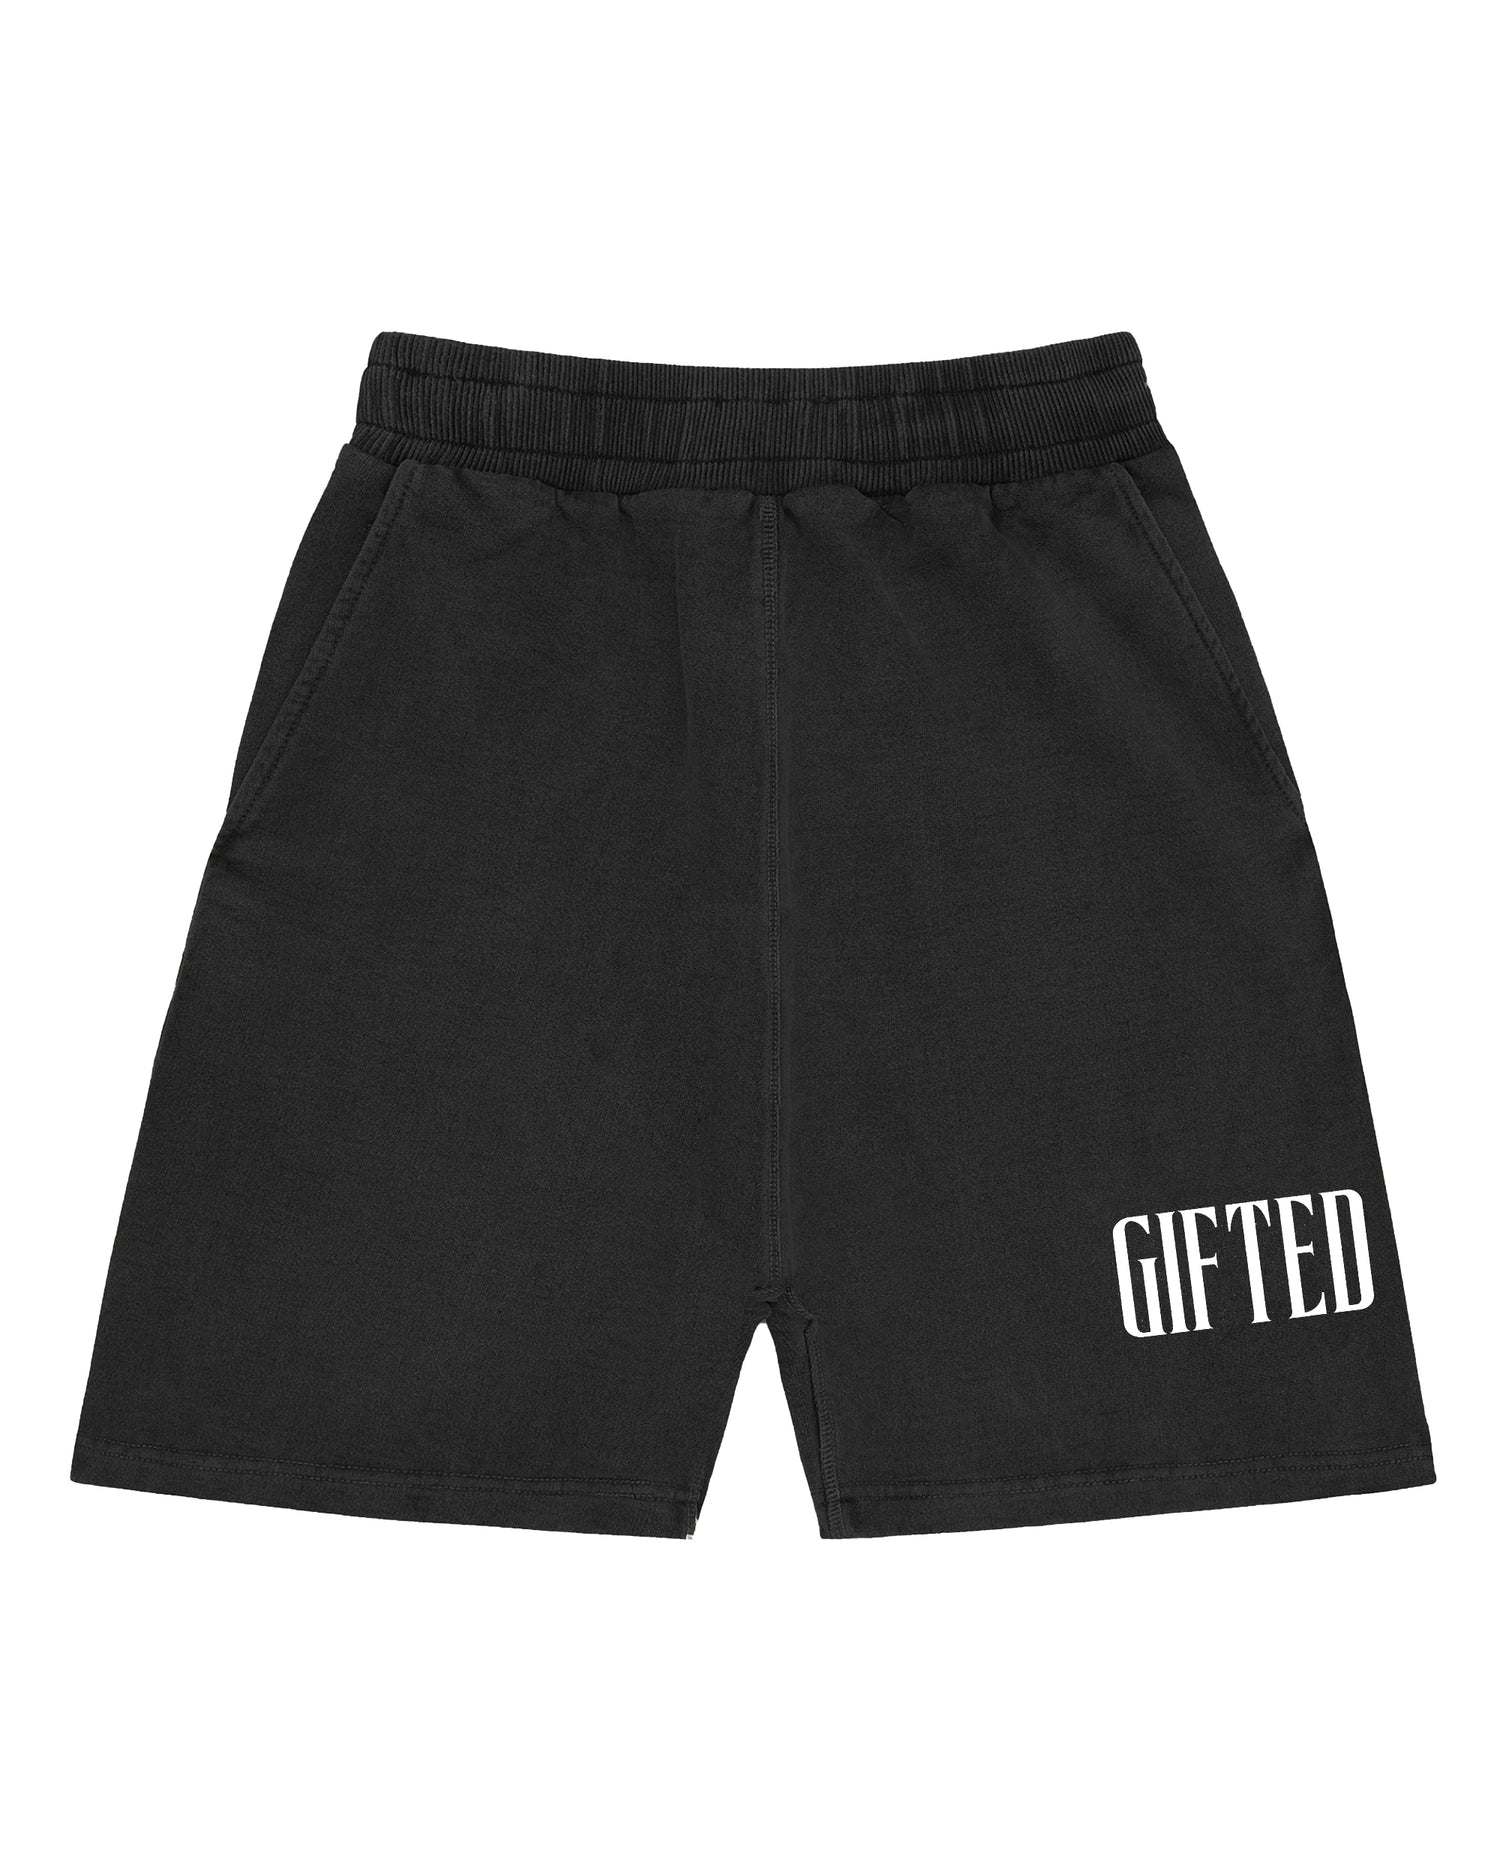 Gifted Shorts - Washed Black